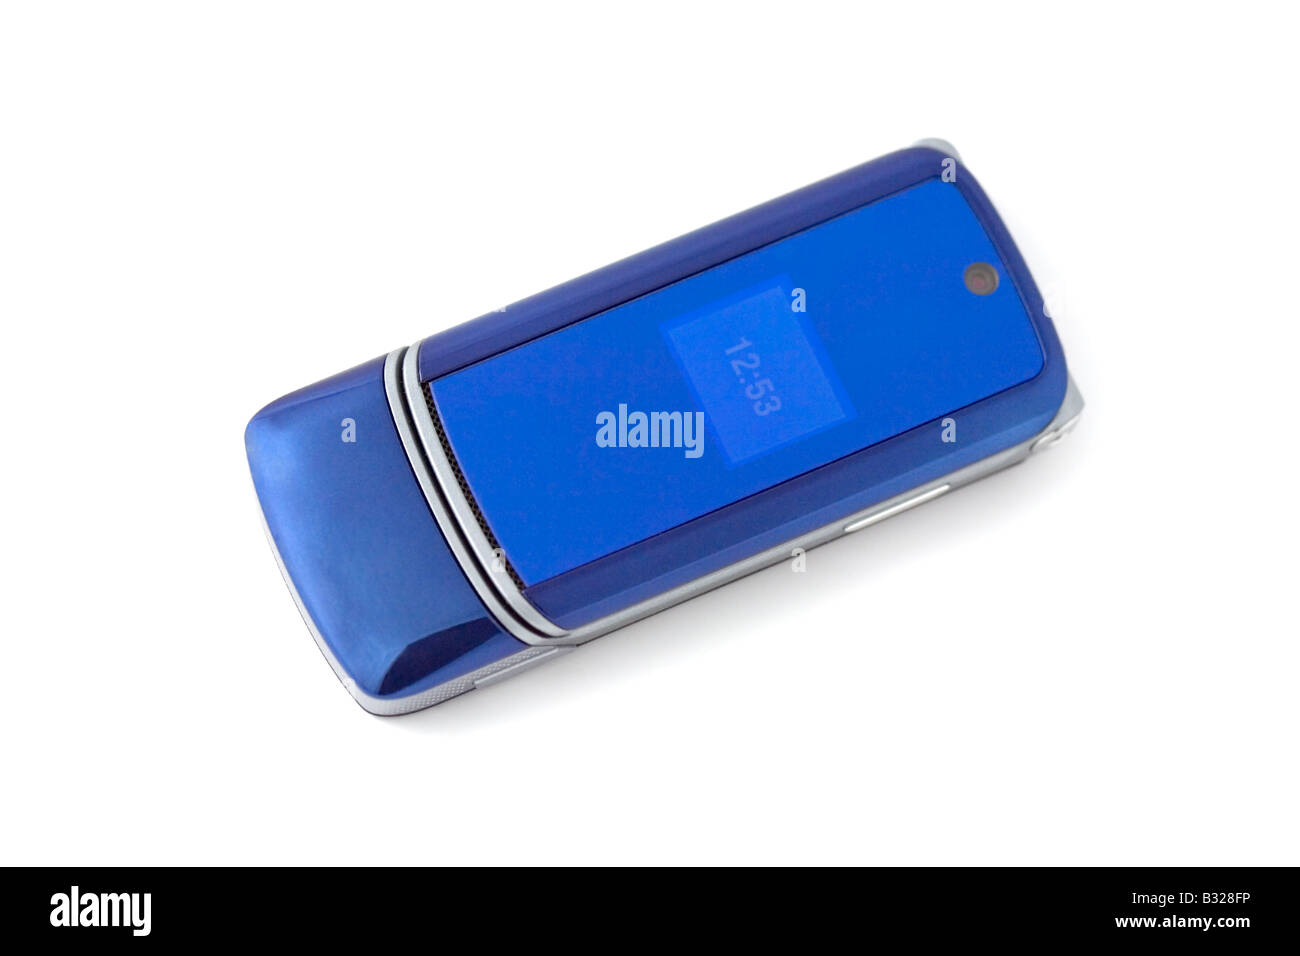 Blue telefono mobile in stile moderno Foto Stock